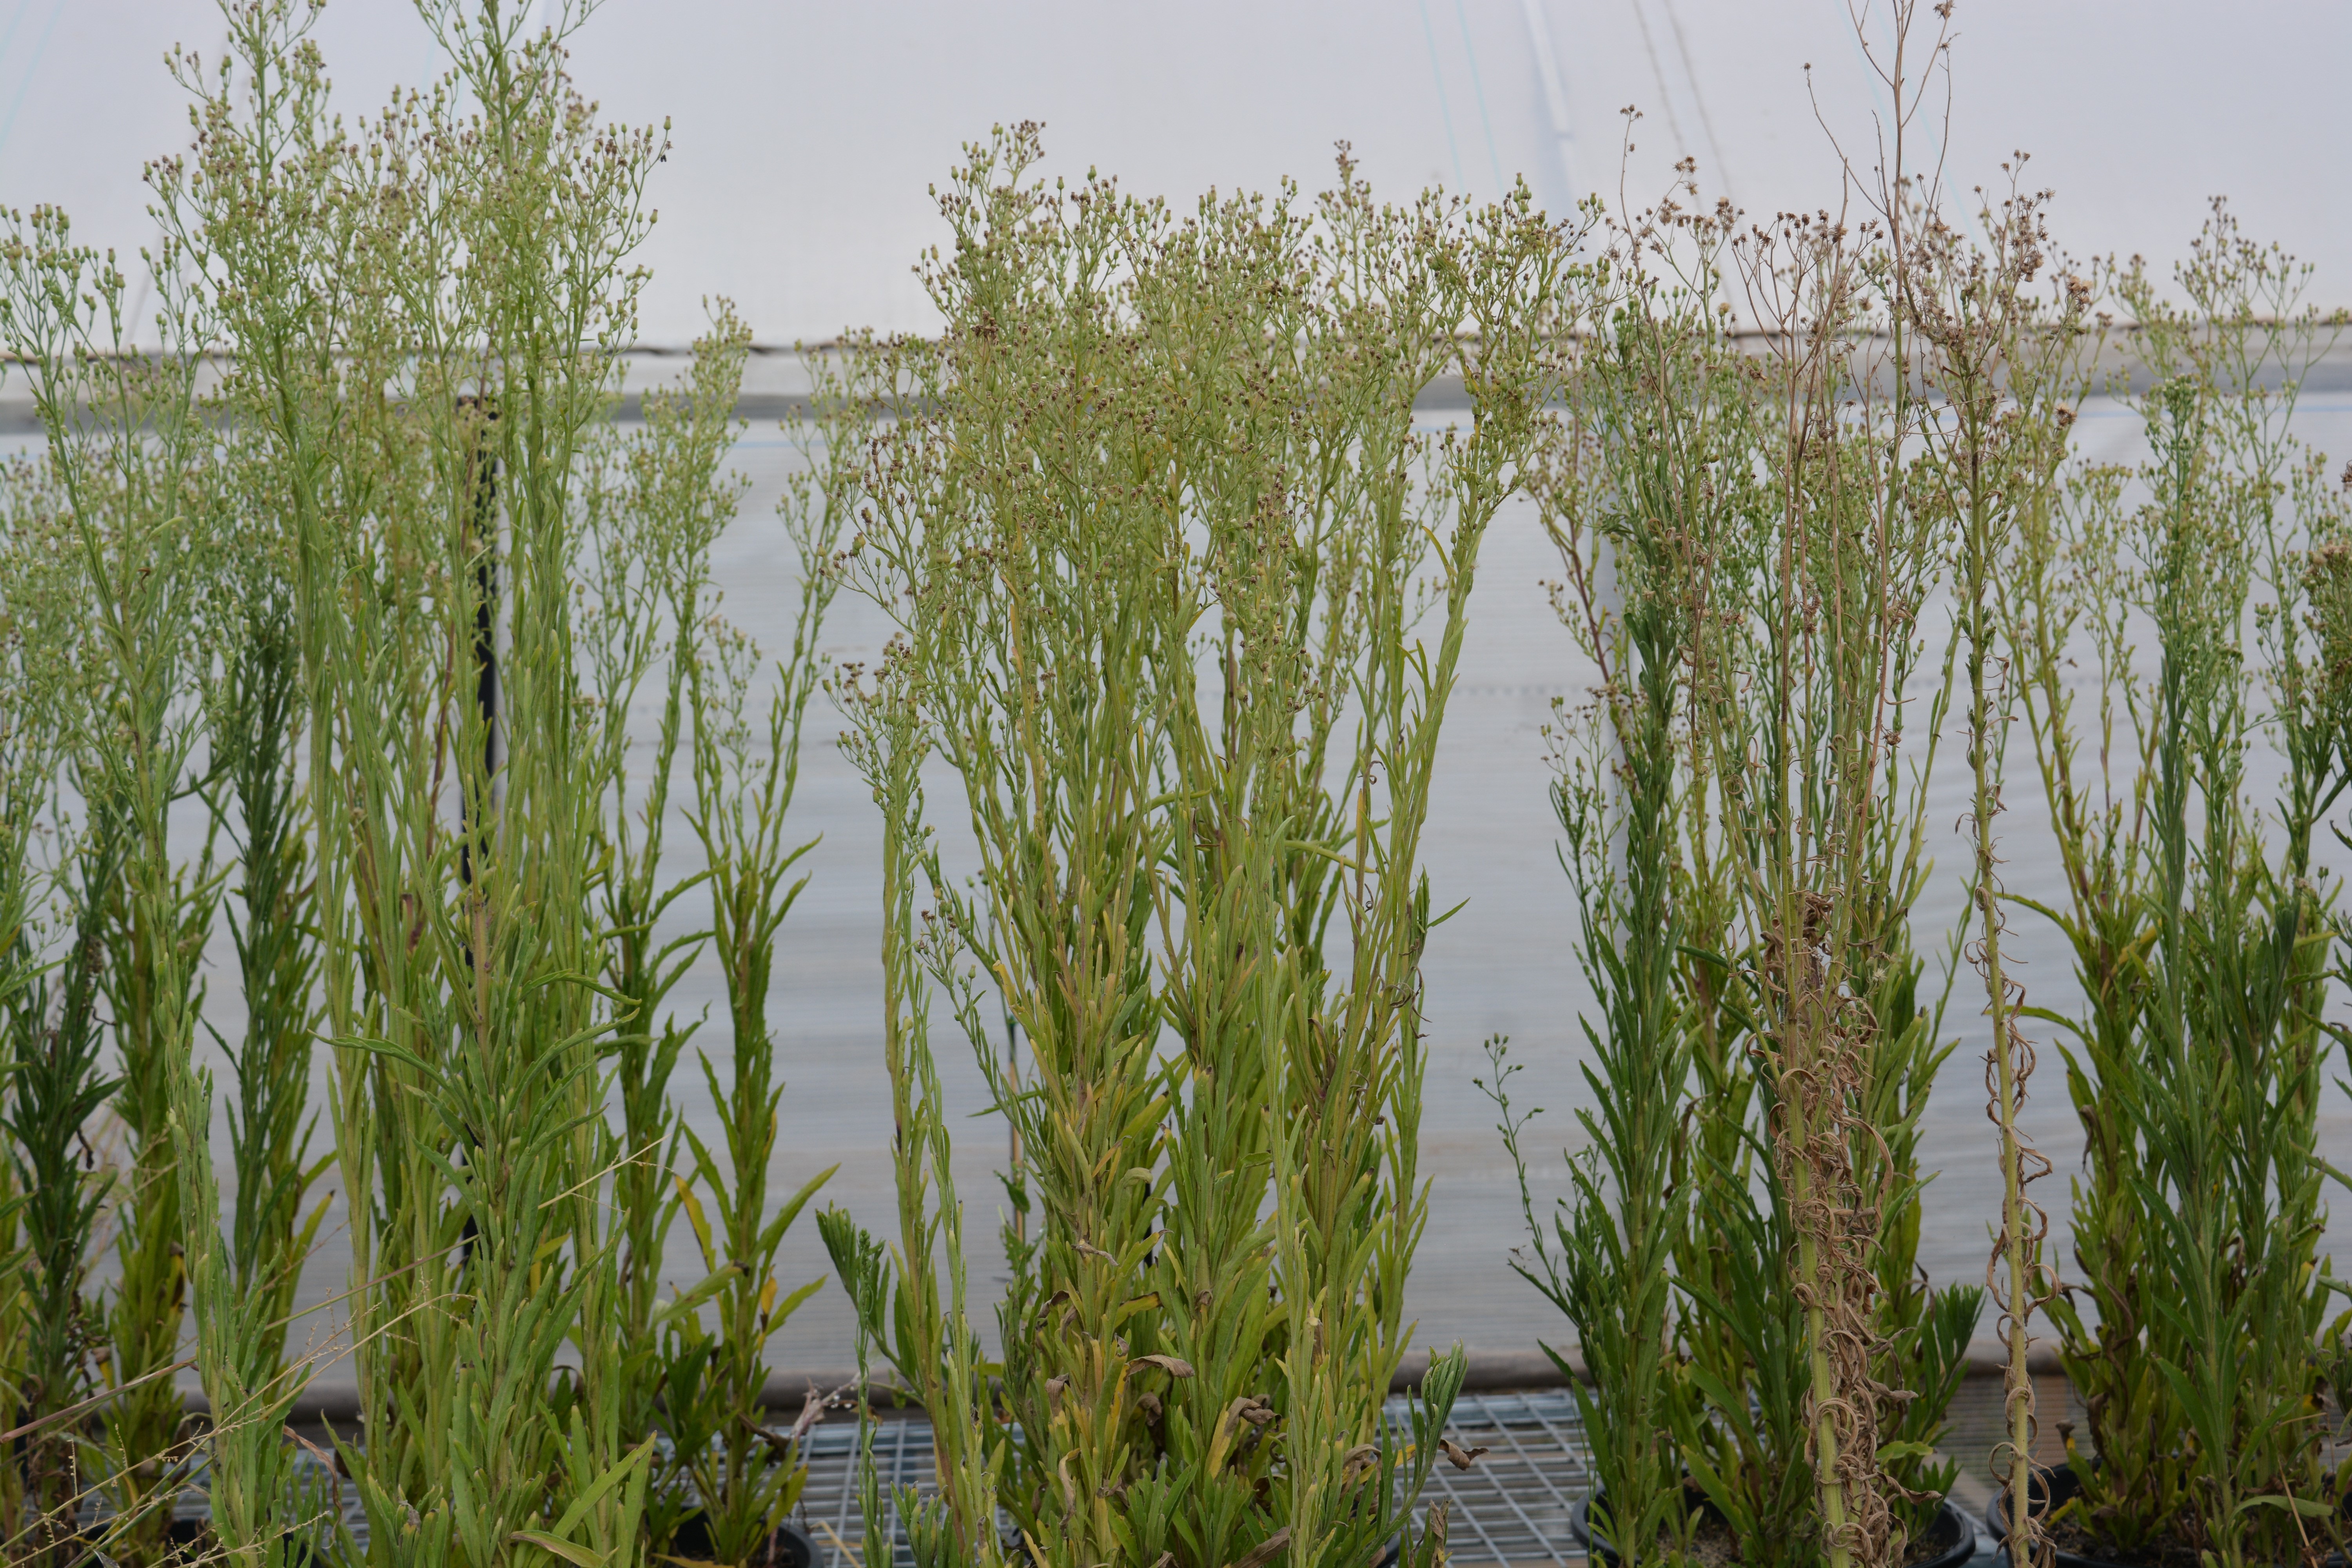 This photo shows tall fleabane plants